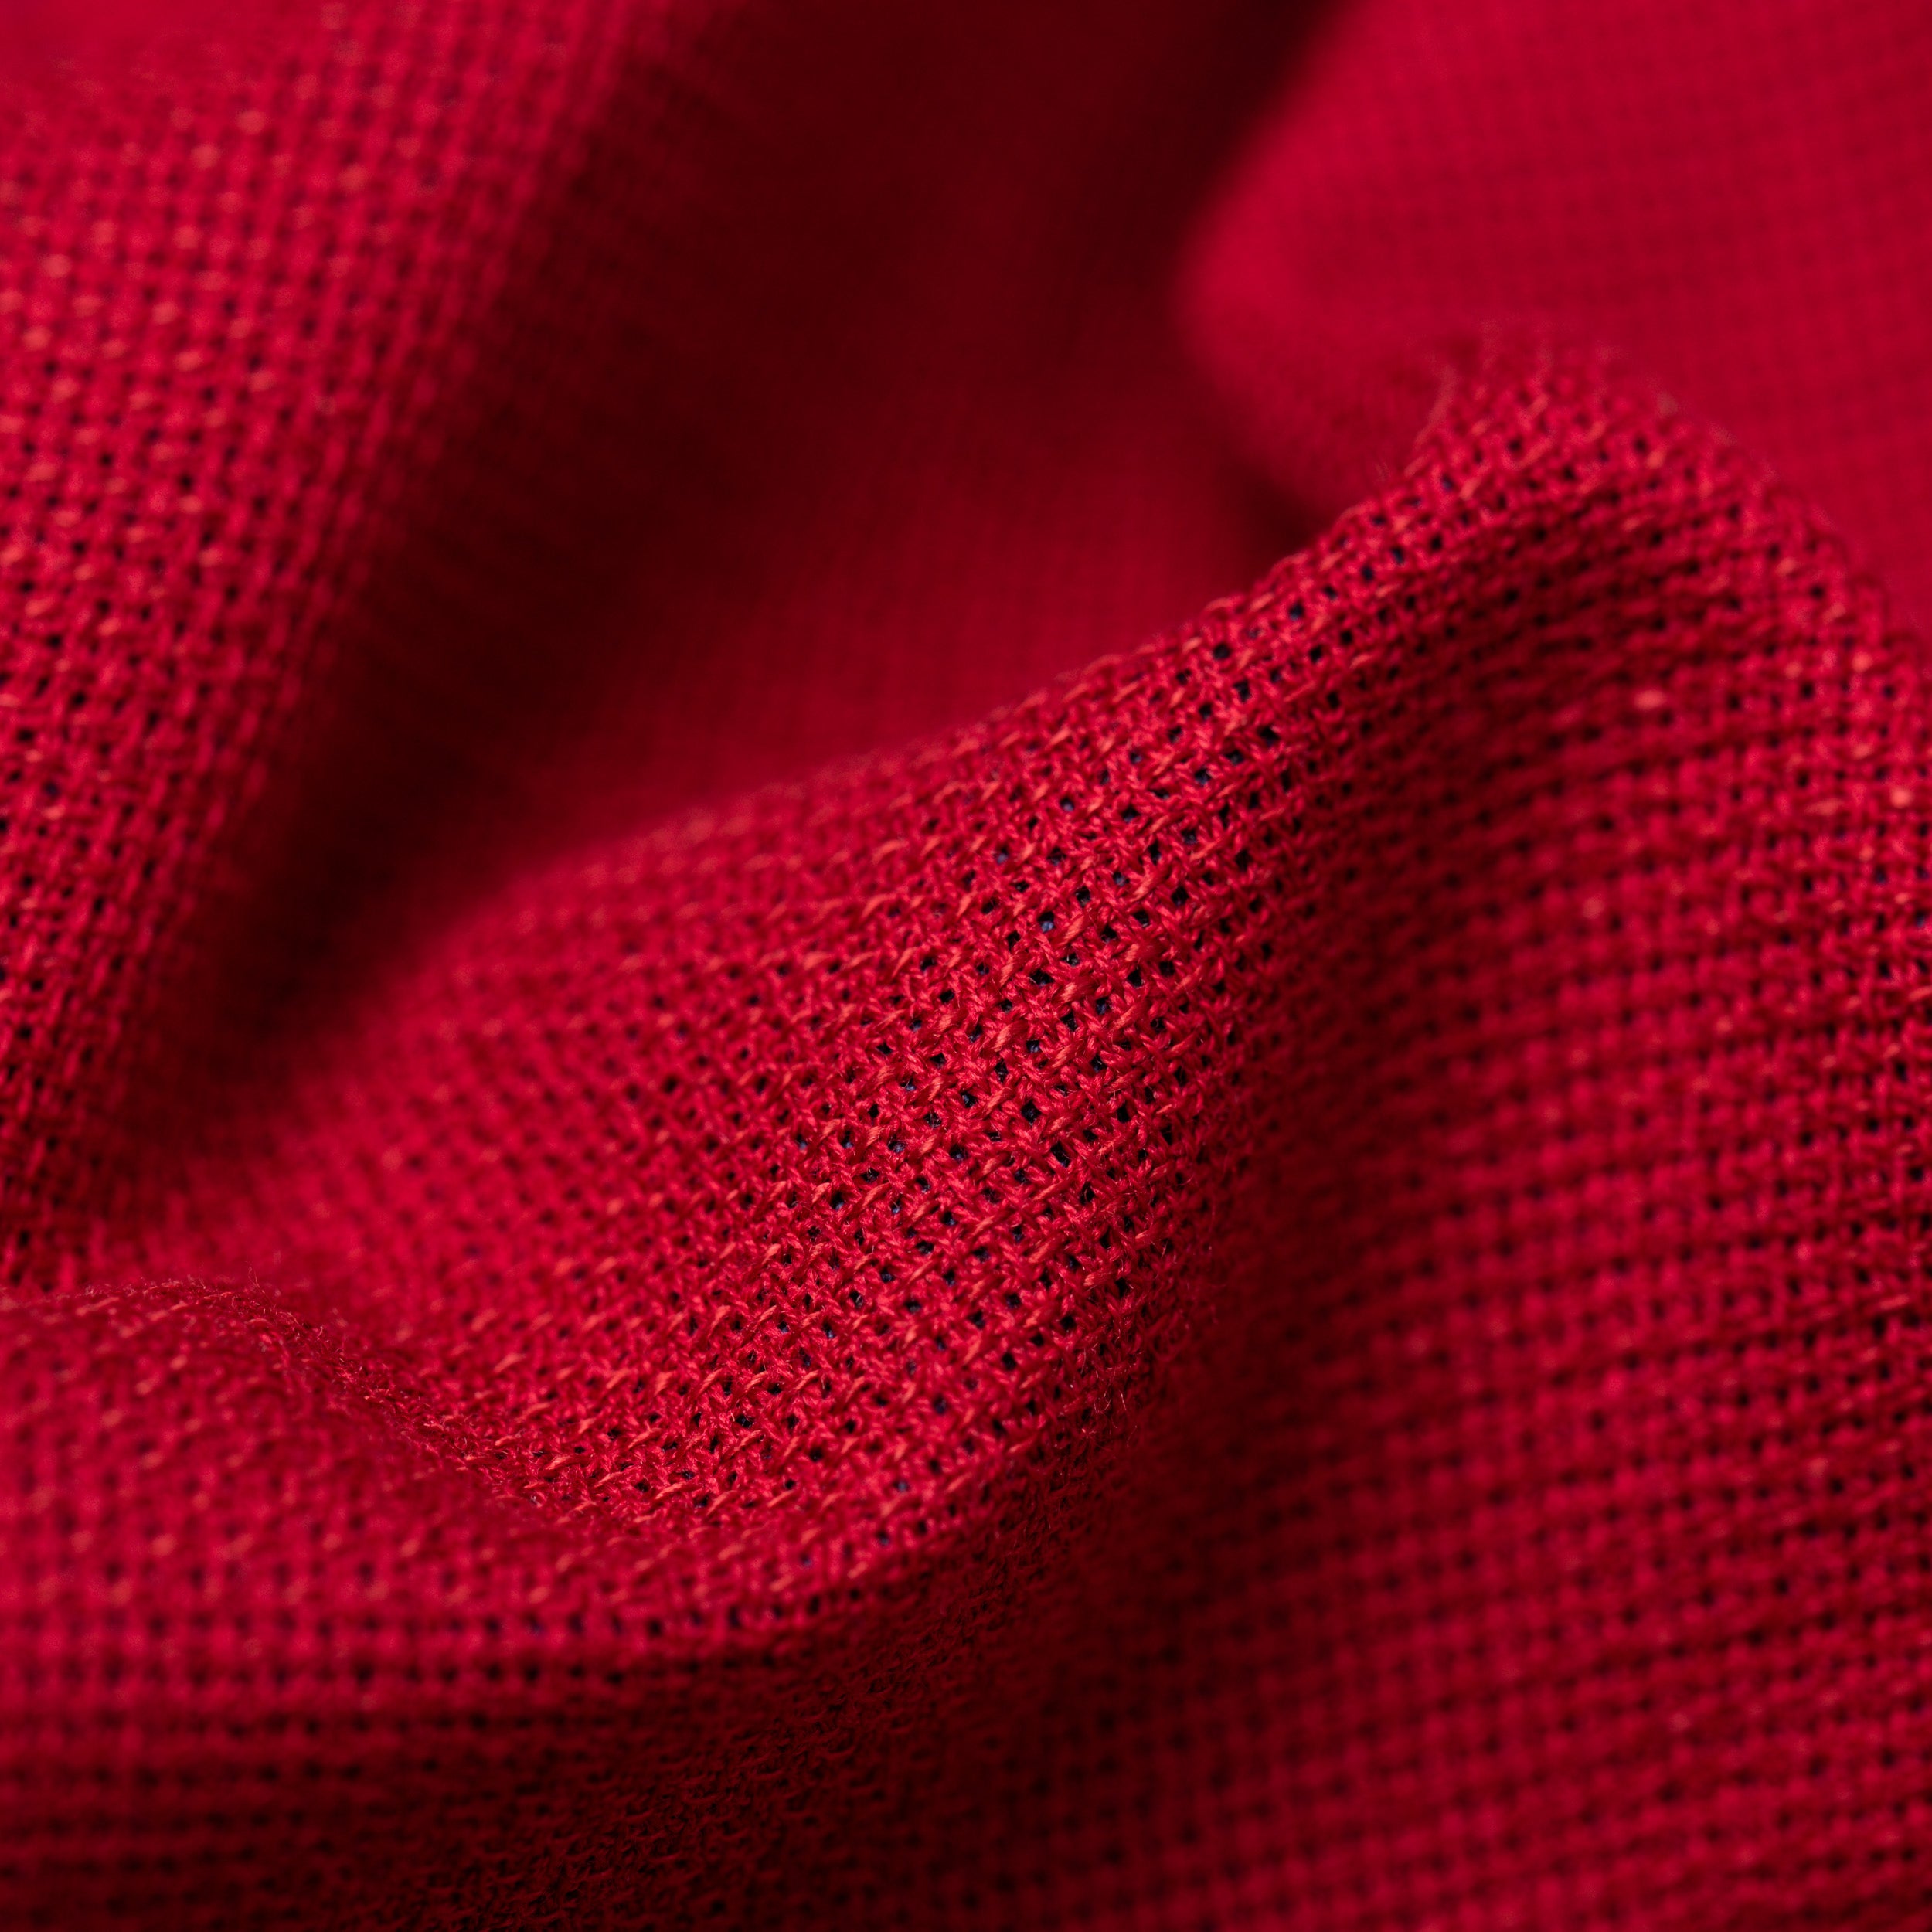 Sartoria PARTENOPEA Red Cotton Linen Unconstructed Summer Jacket 50 NEW 40 SARTORIA PARTENOPEA